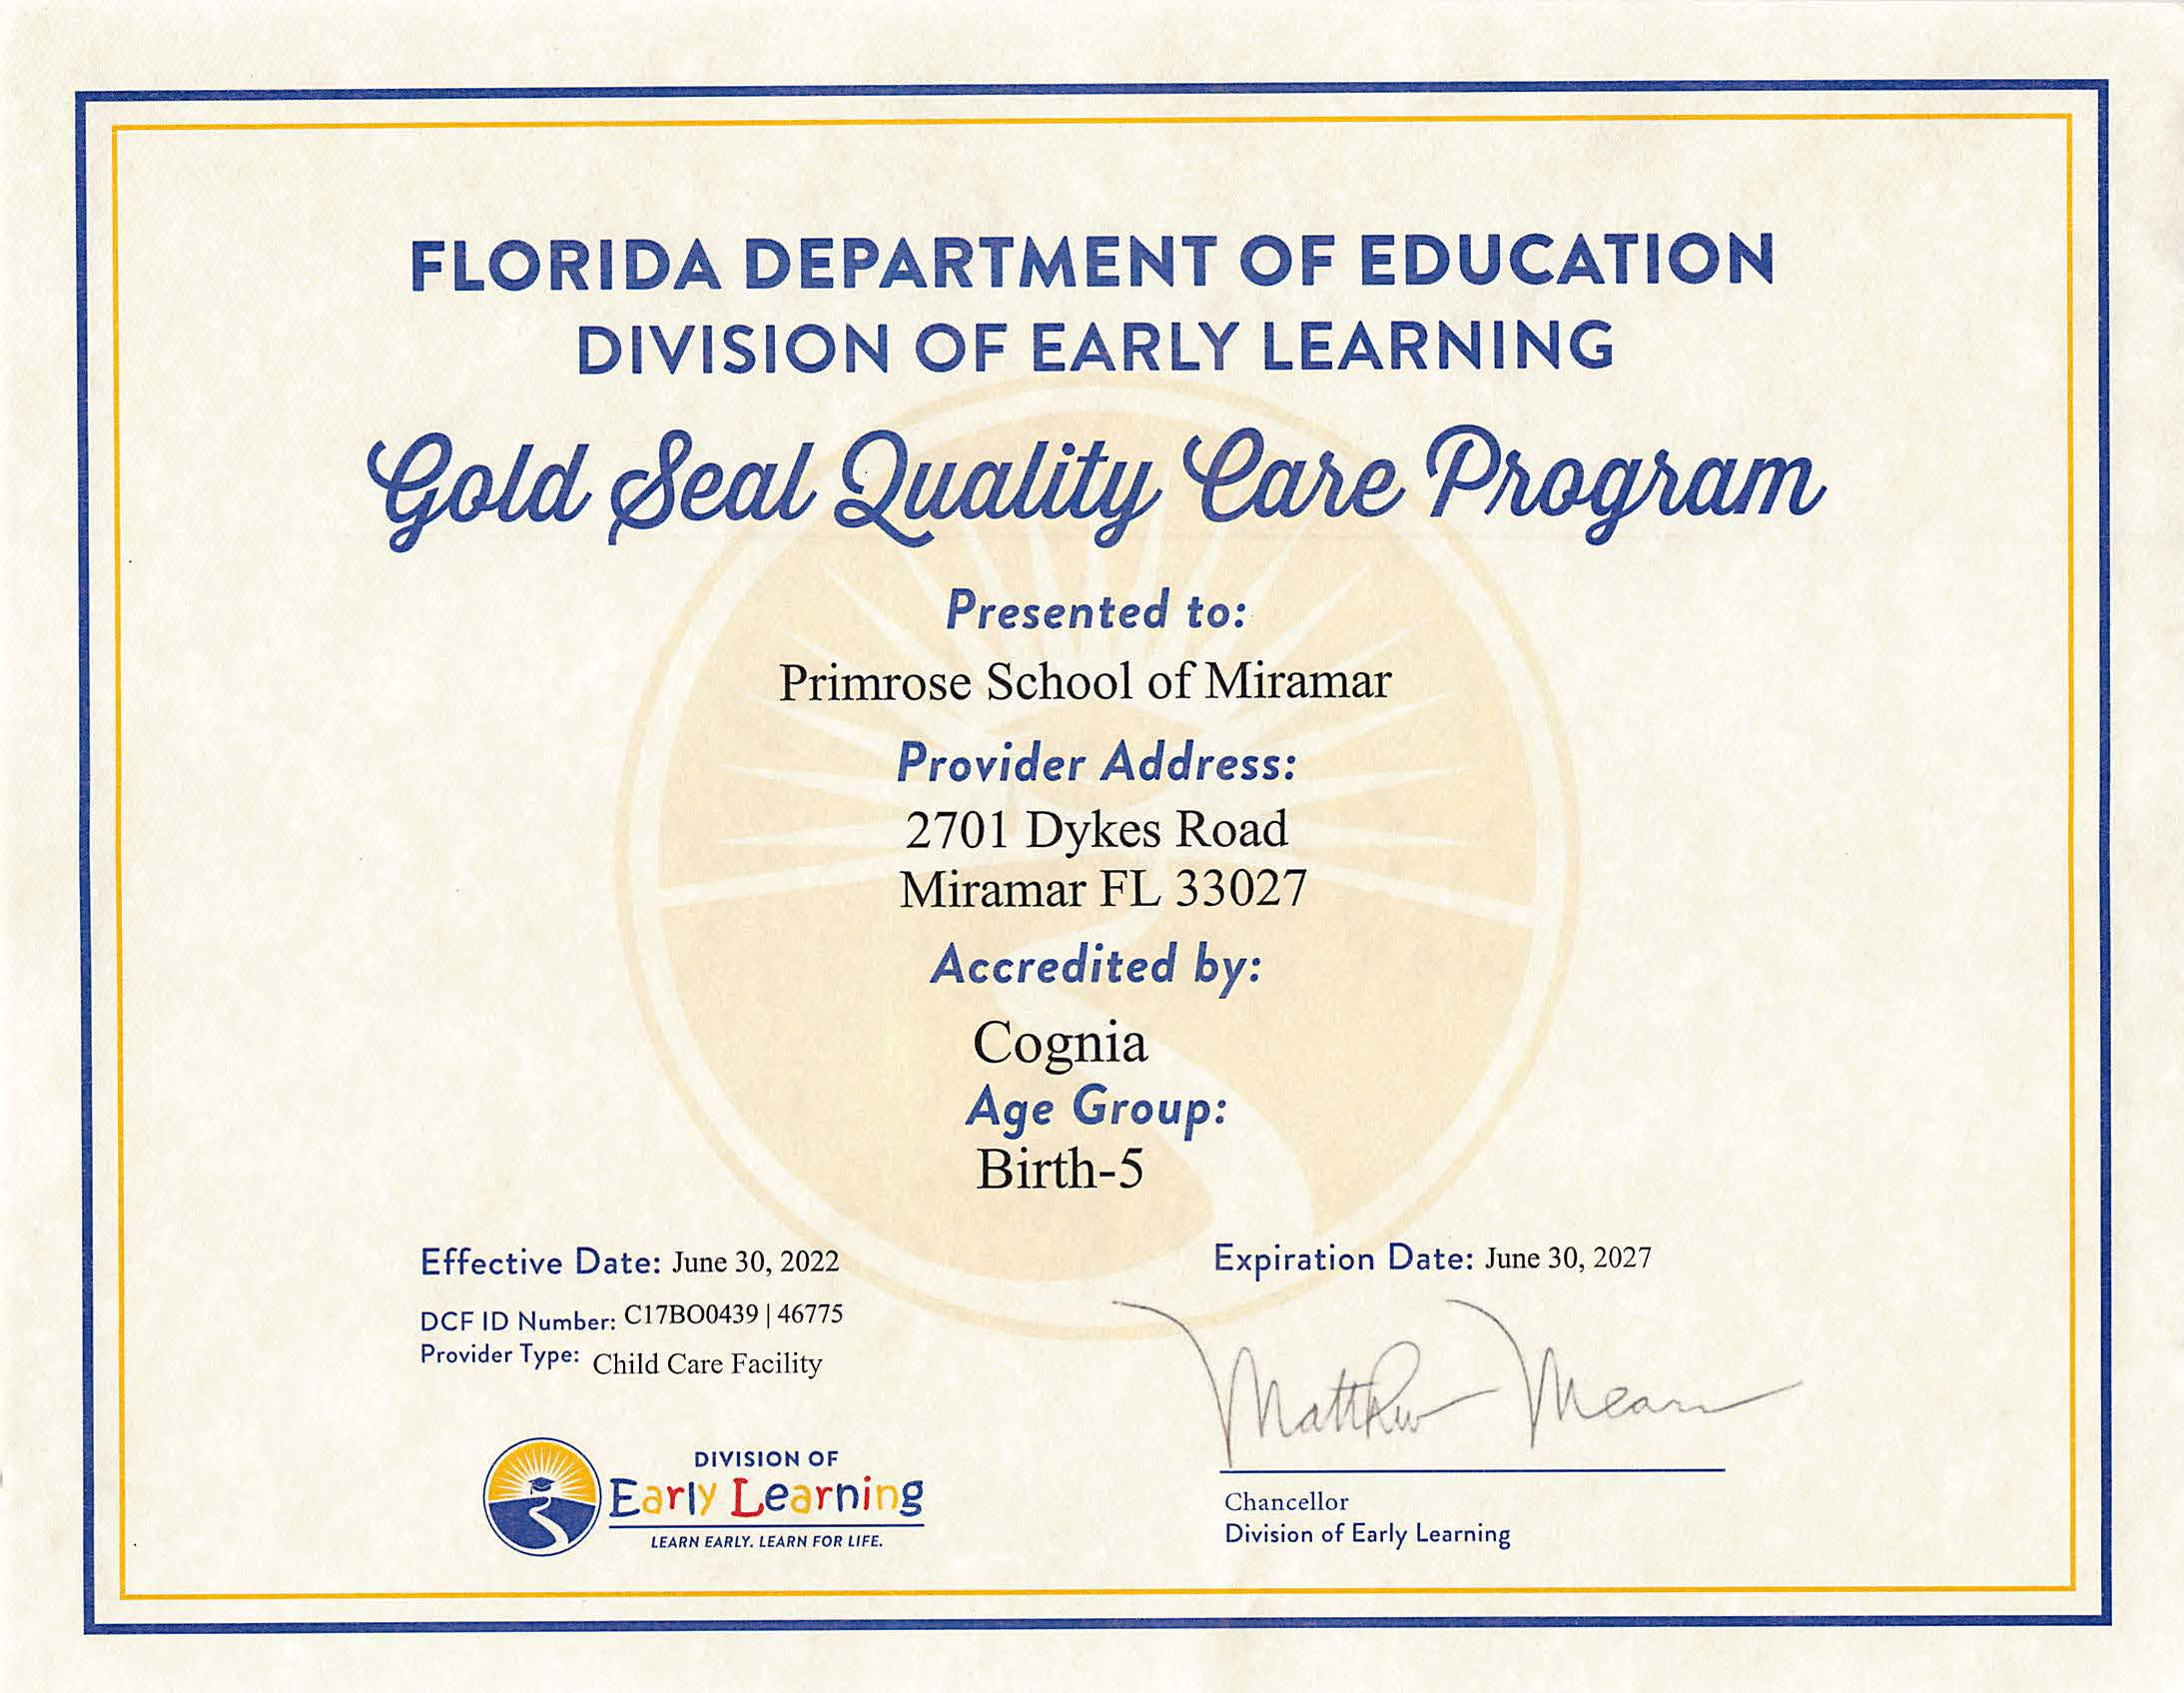 Primrose School of Miramar is proud recipient of Florida Gold Seal